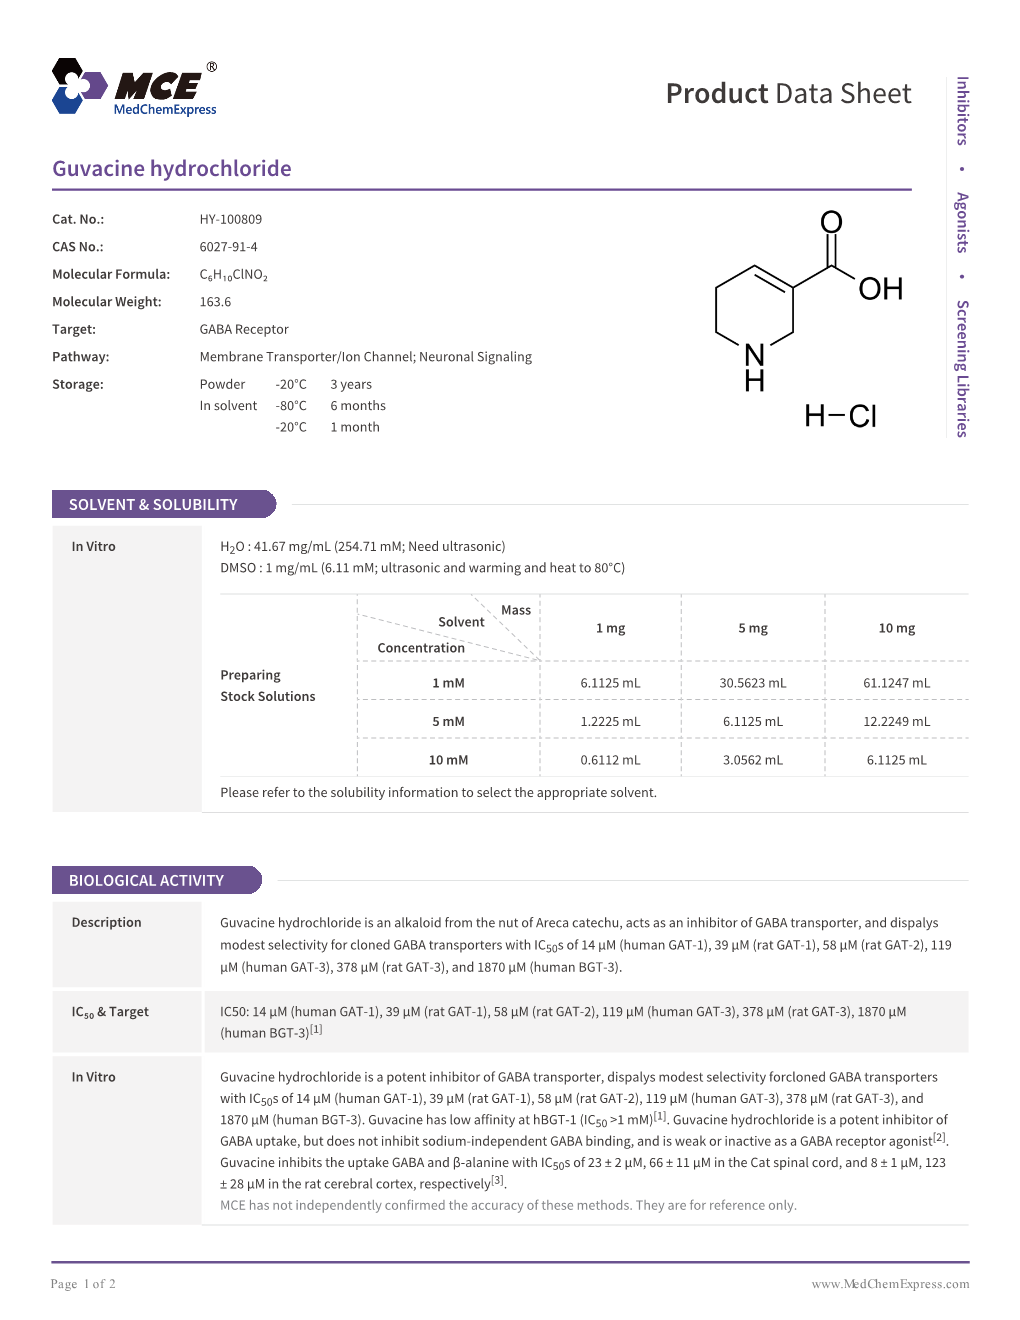 Guvacine Hydrochloride | Medchemexpress